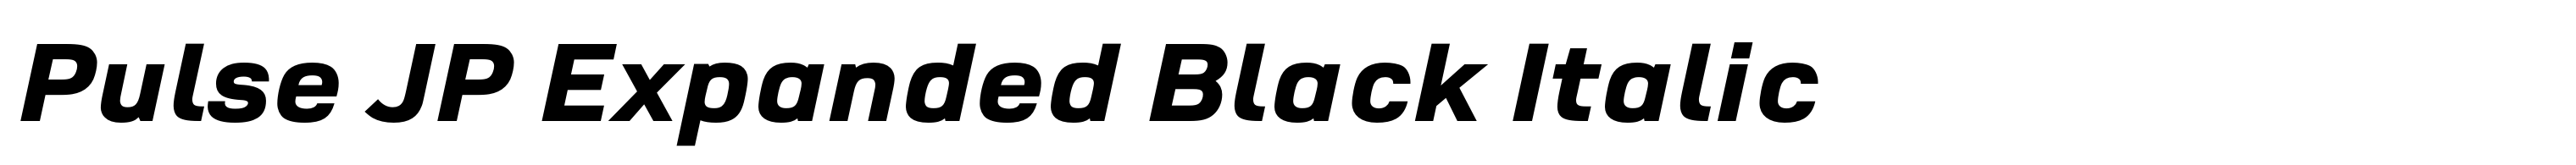 Pulse JP Expanded Black Italic